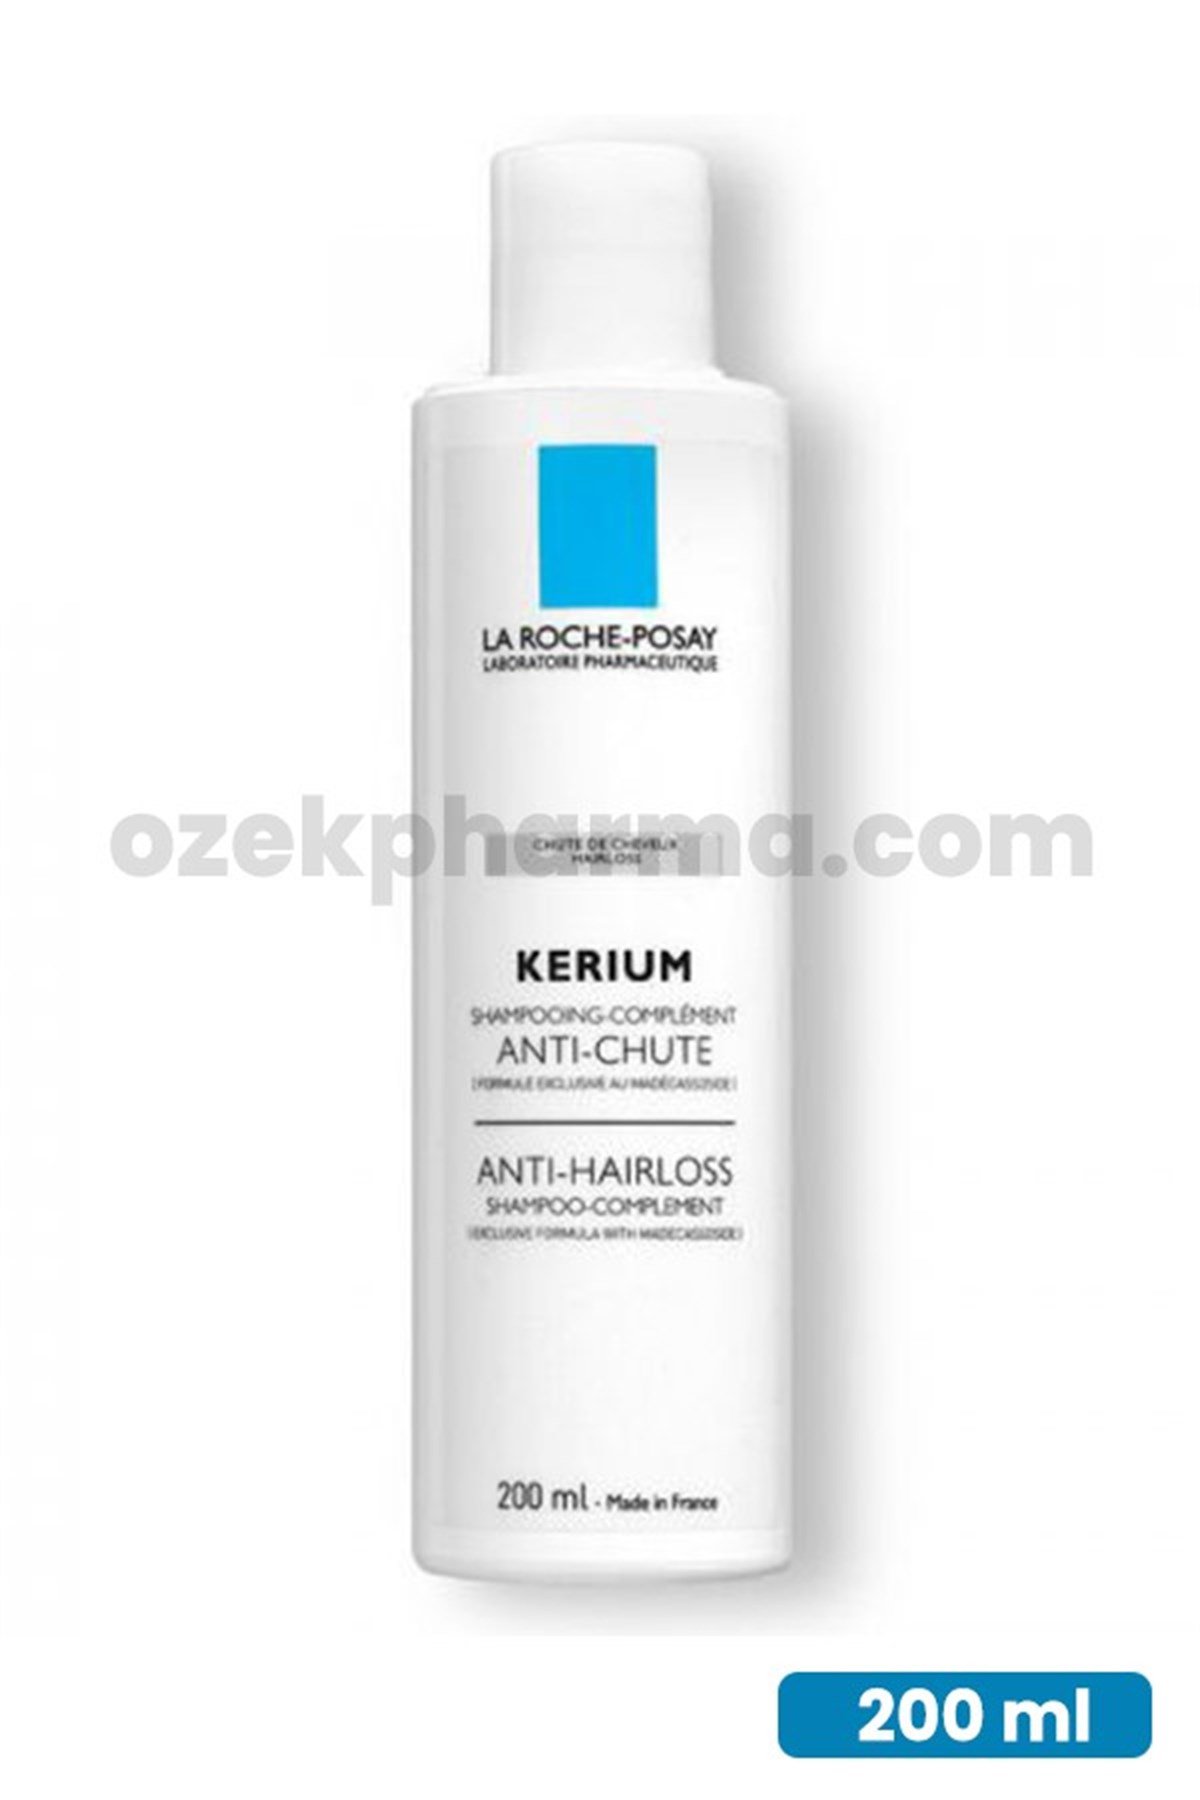 La Roche Posay Kerium AC Saç Dökülmesine Karşı Şampuan 200 ml |  ozekpharma.com